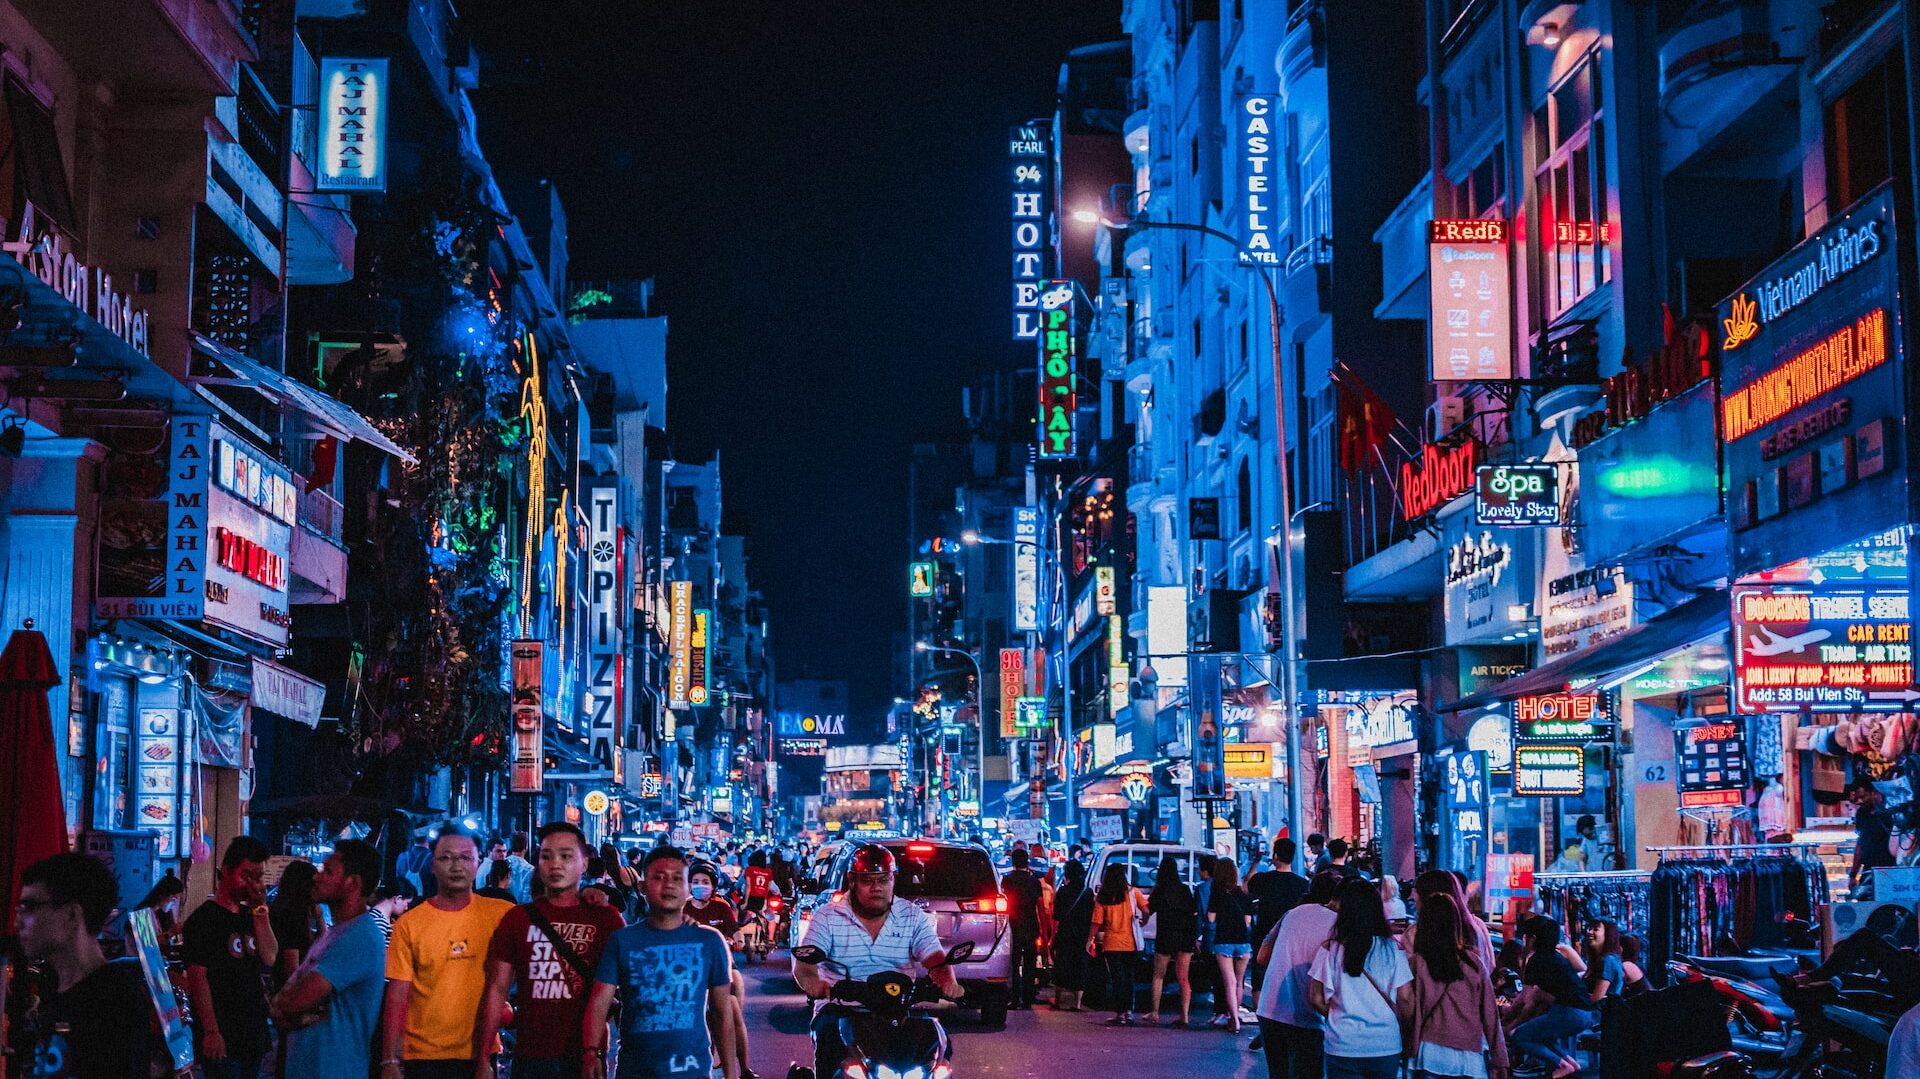 Ho Chi Minh City or Saigon